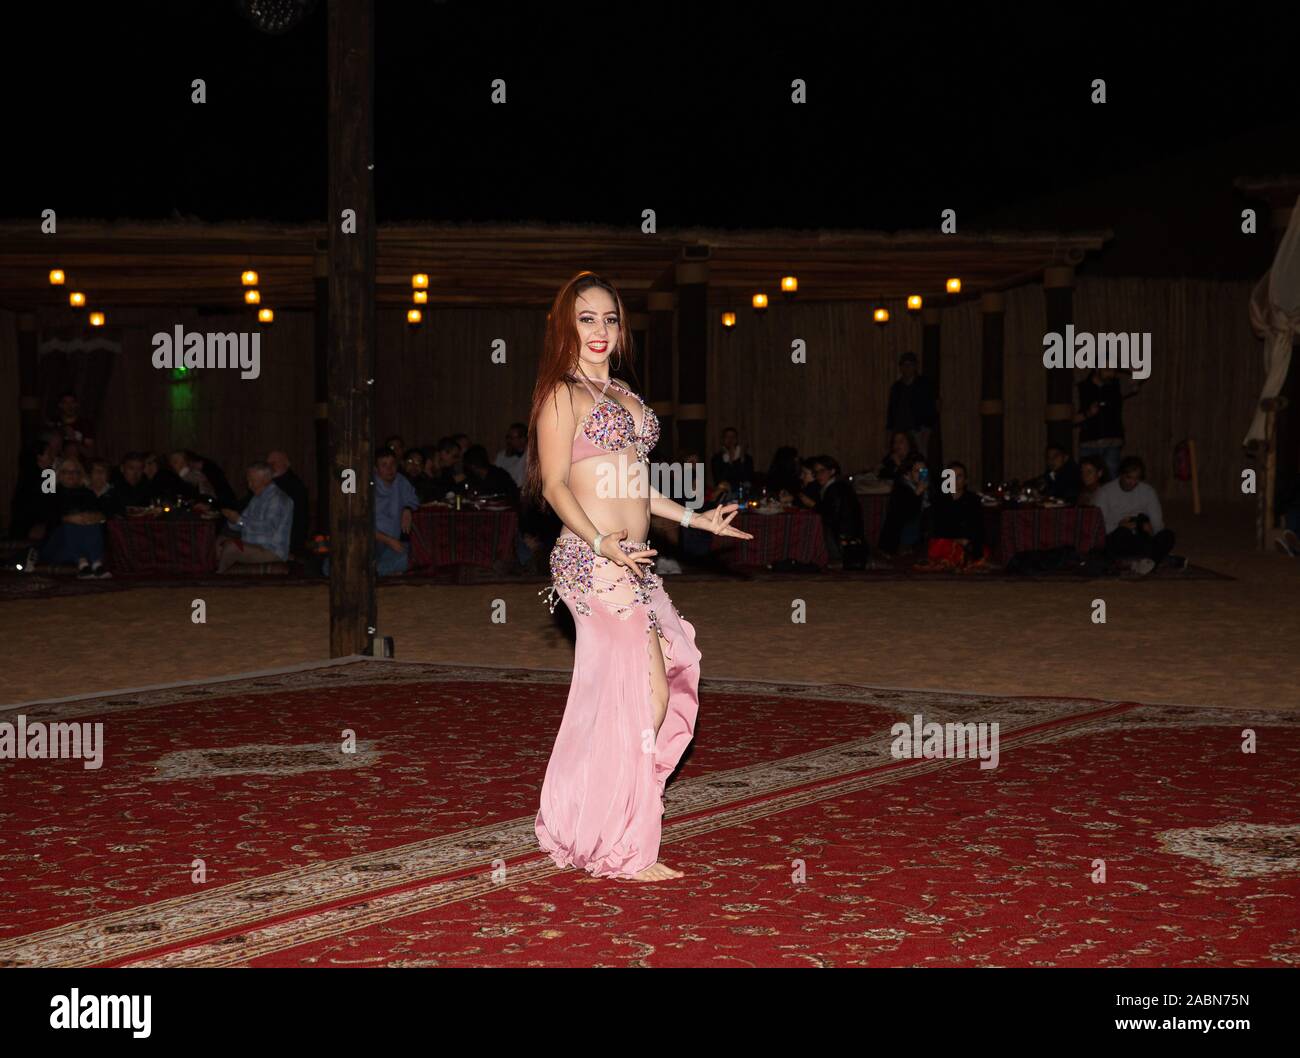 A belly Dancer performs during an Arabian Adventures Desert Safari in the Sahara Desert, Dubai, UAE Stock Photo